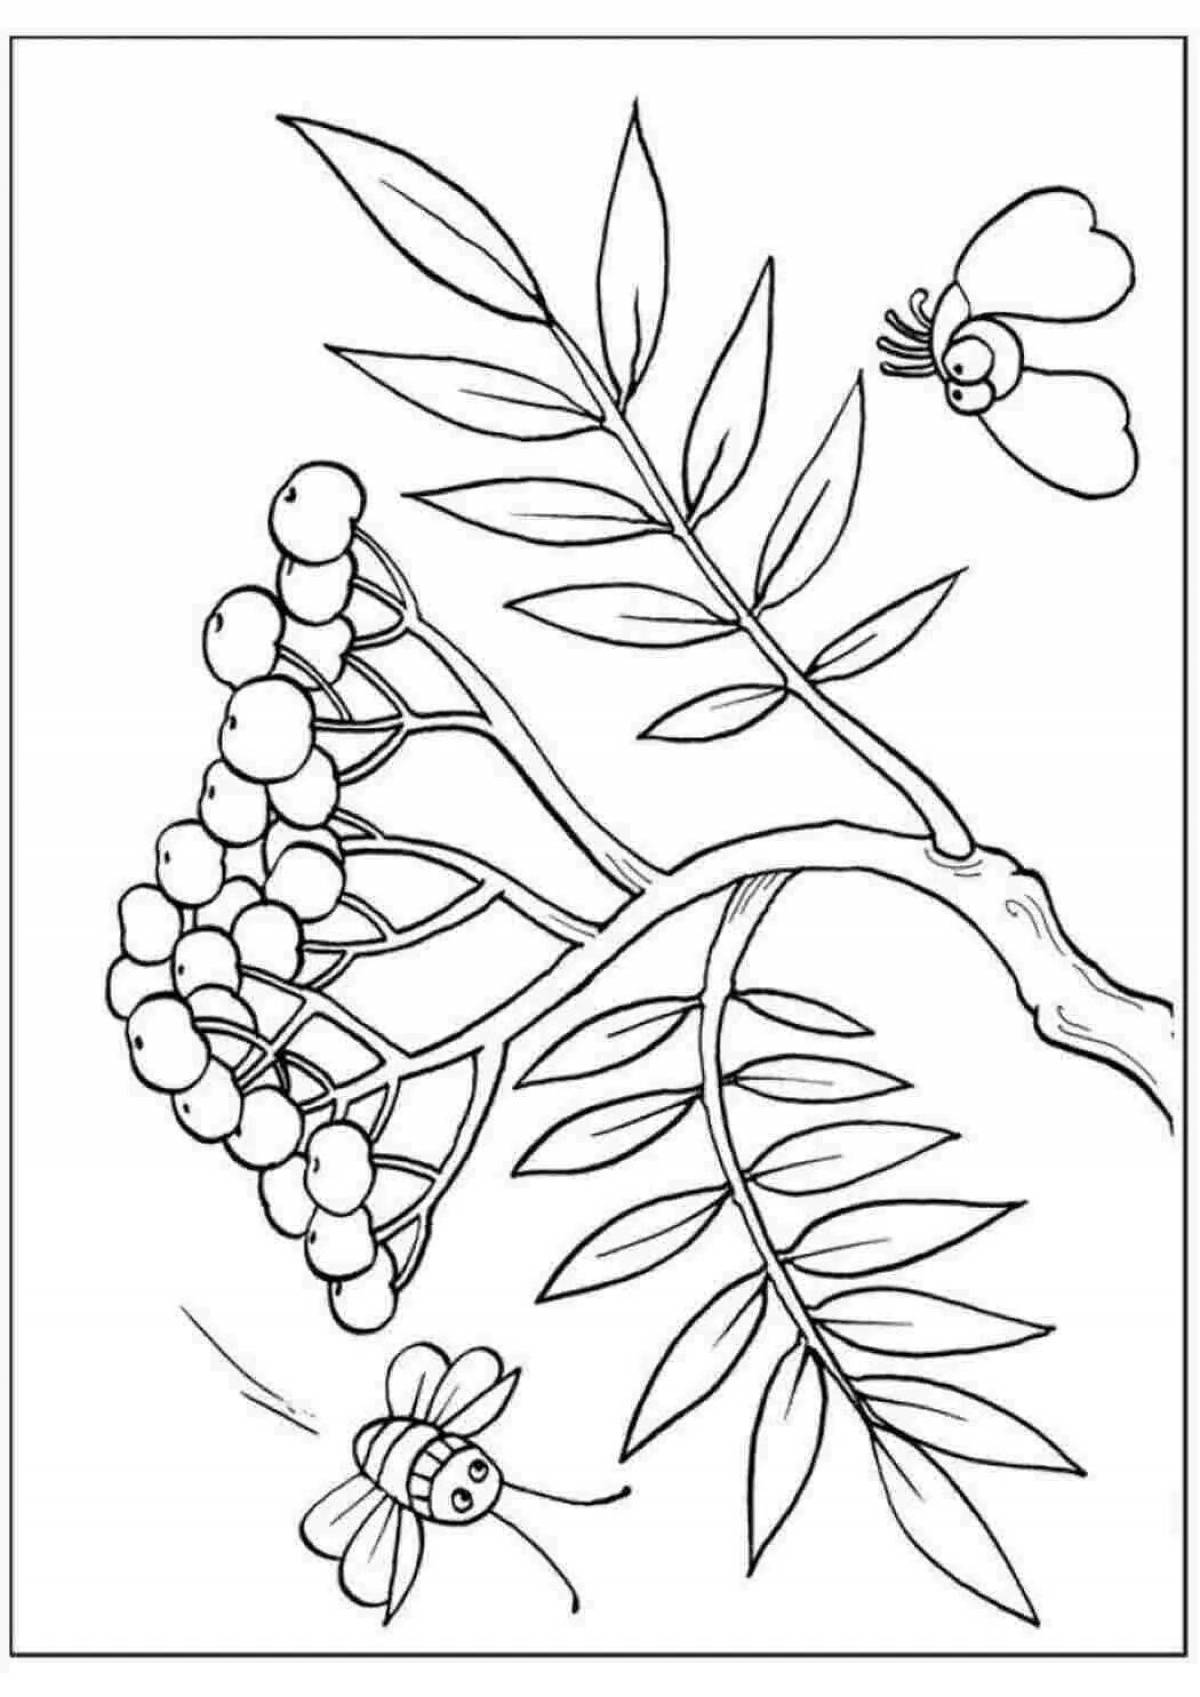 Creative rowan branch coloring for pre-k